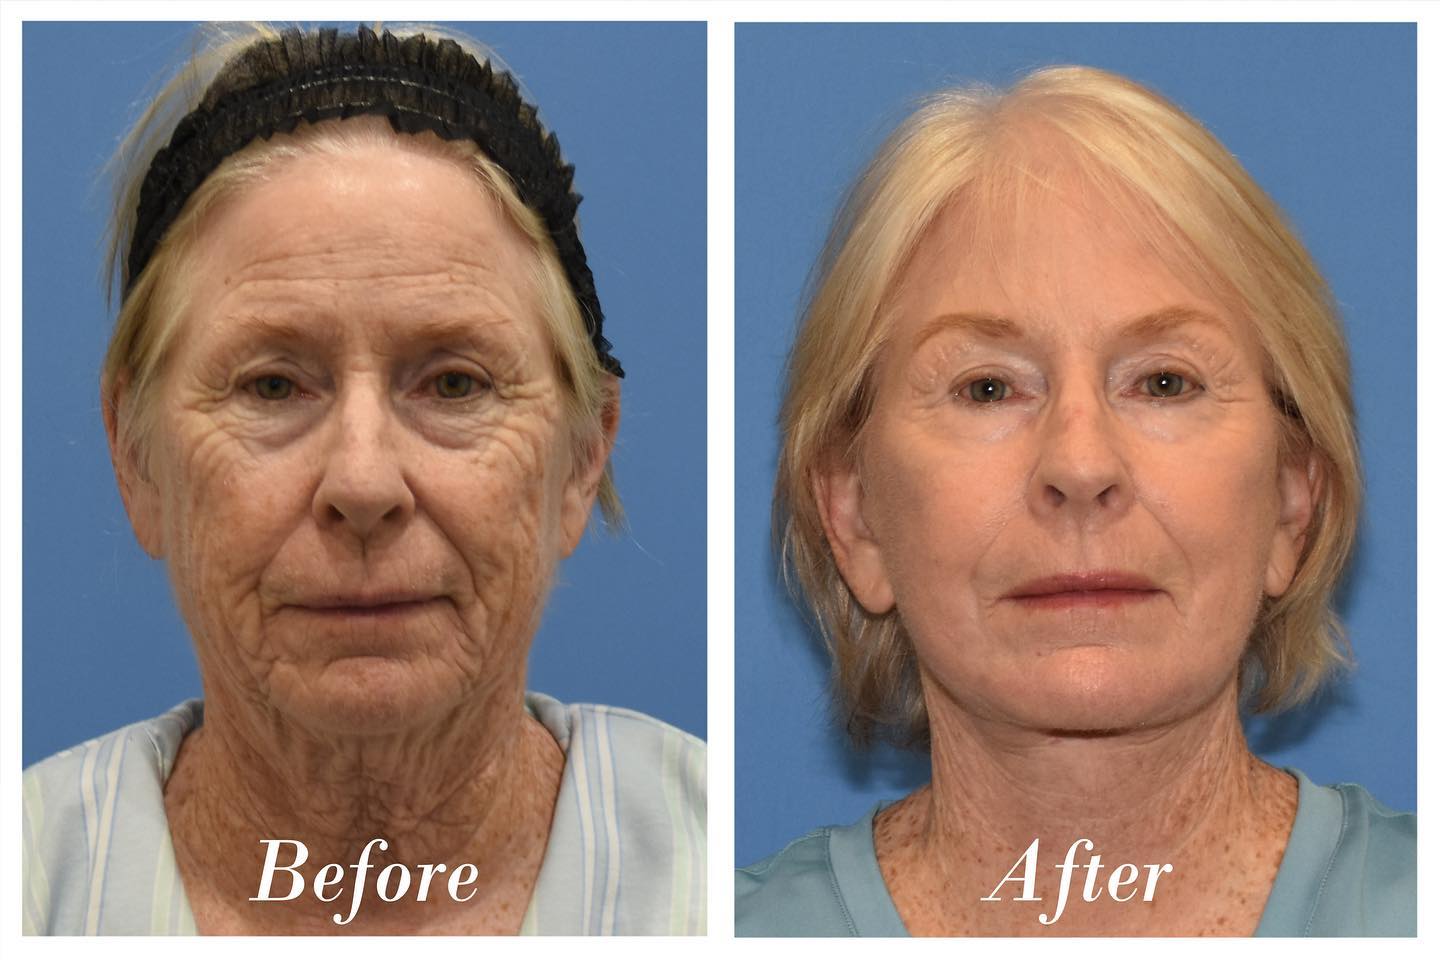 C02 Laser Skin Resurfacing Before & After Image